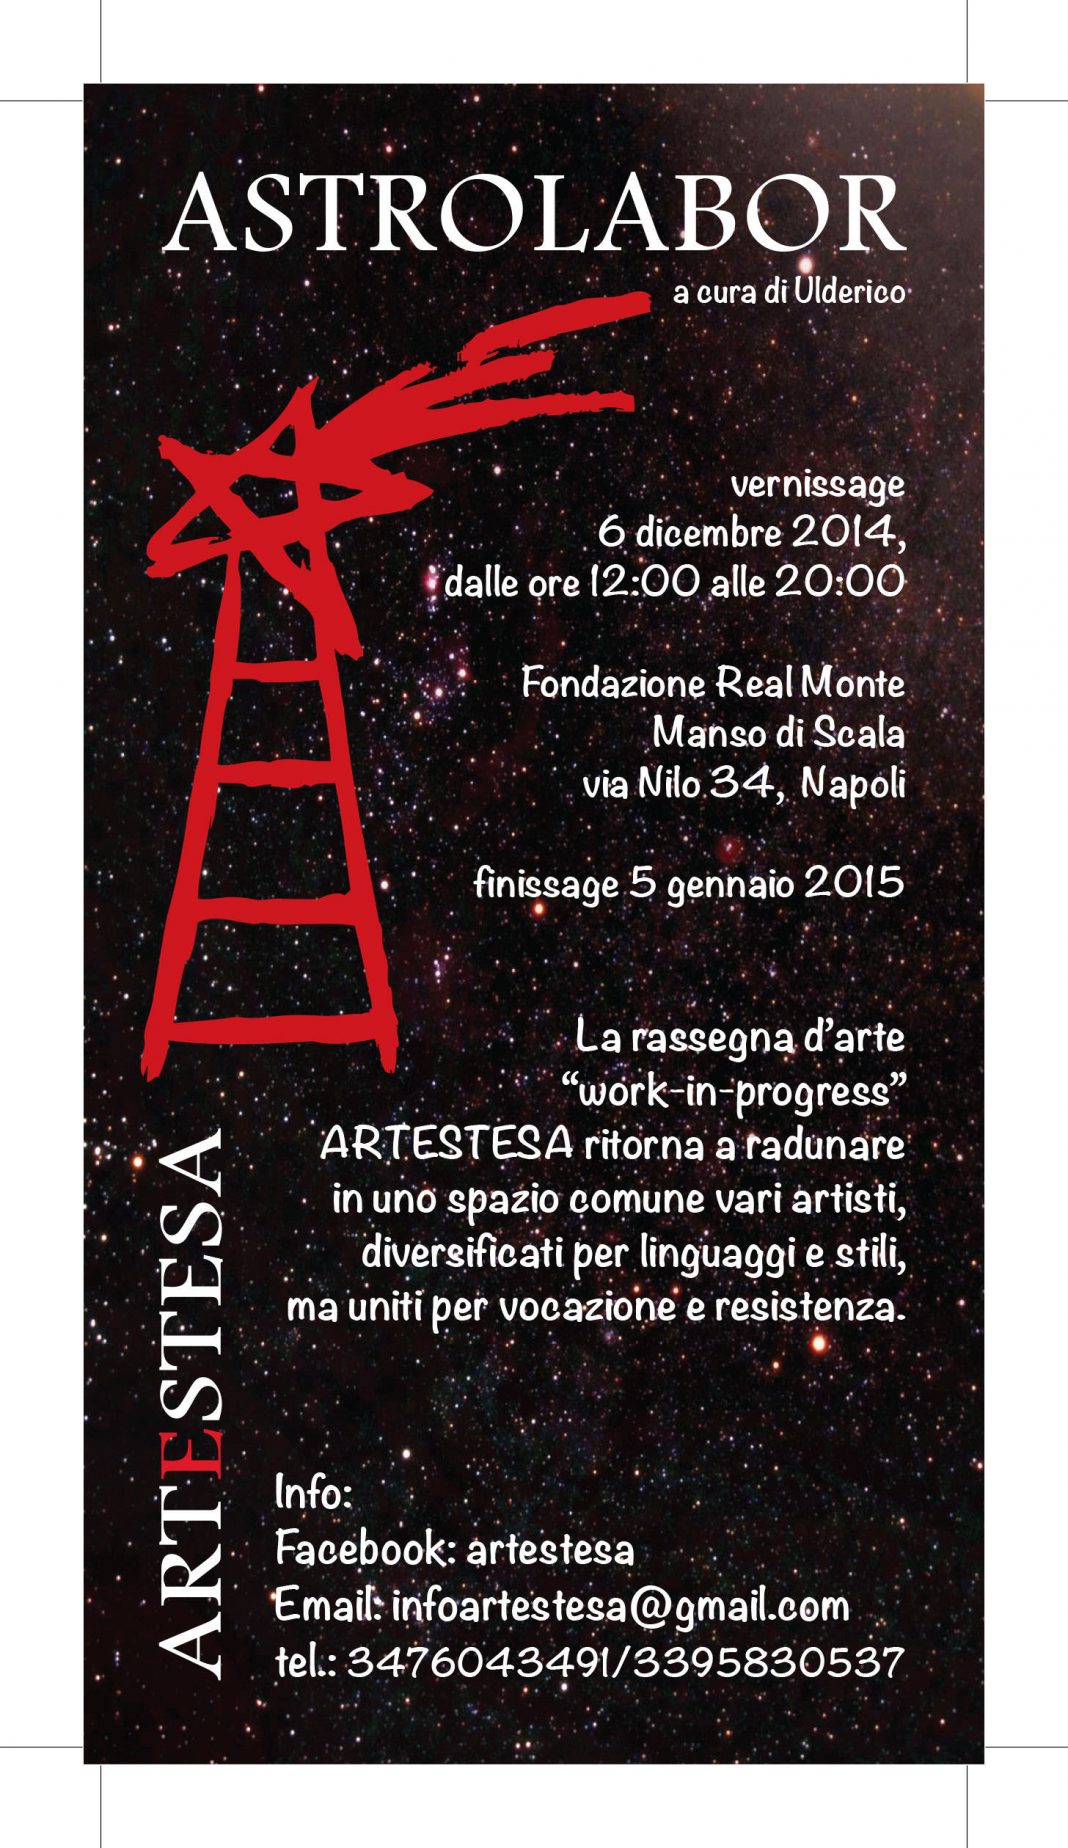 Artestesa – Astrolaborhttps://www.exibart.com/repository/media/eventi/2014/11/artestesa-8211-astrolabor-1068x1848.jpg